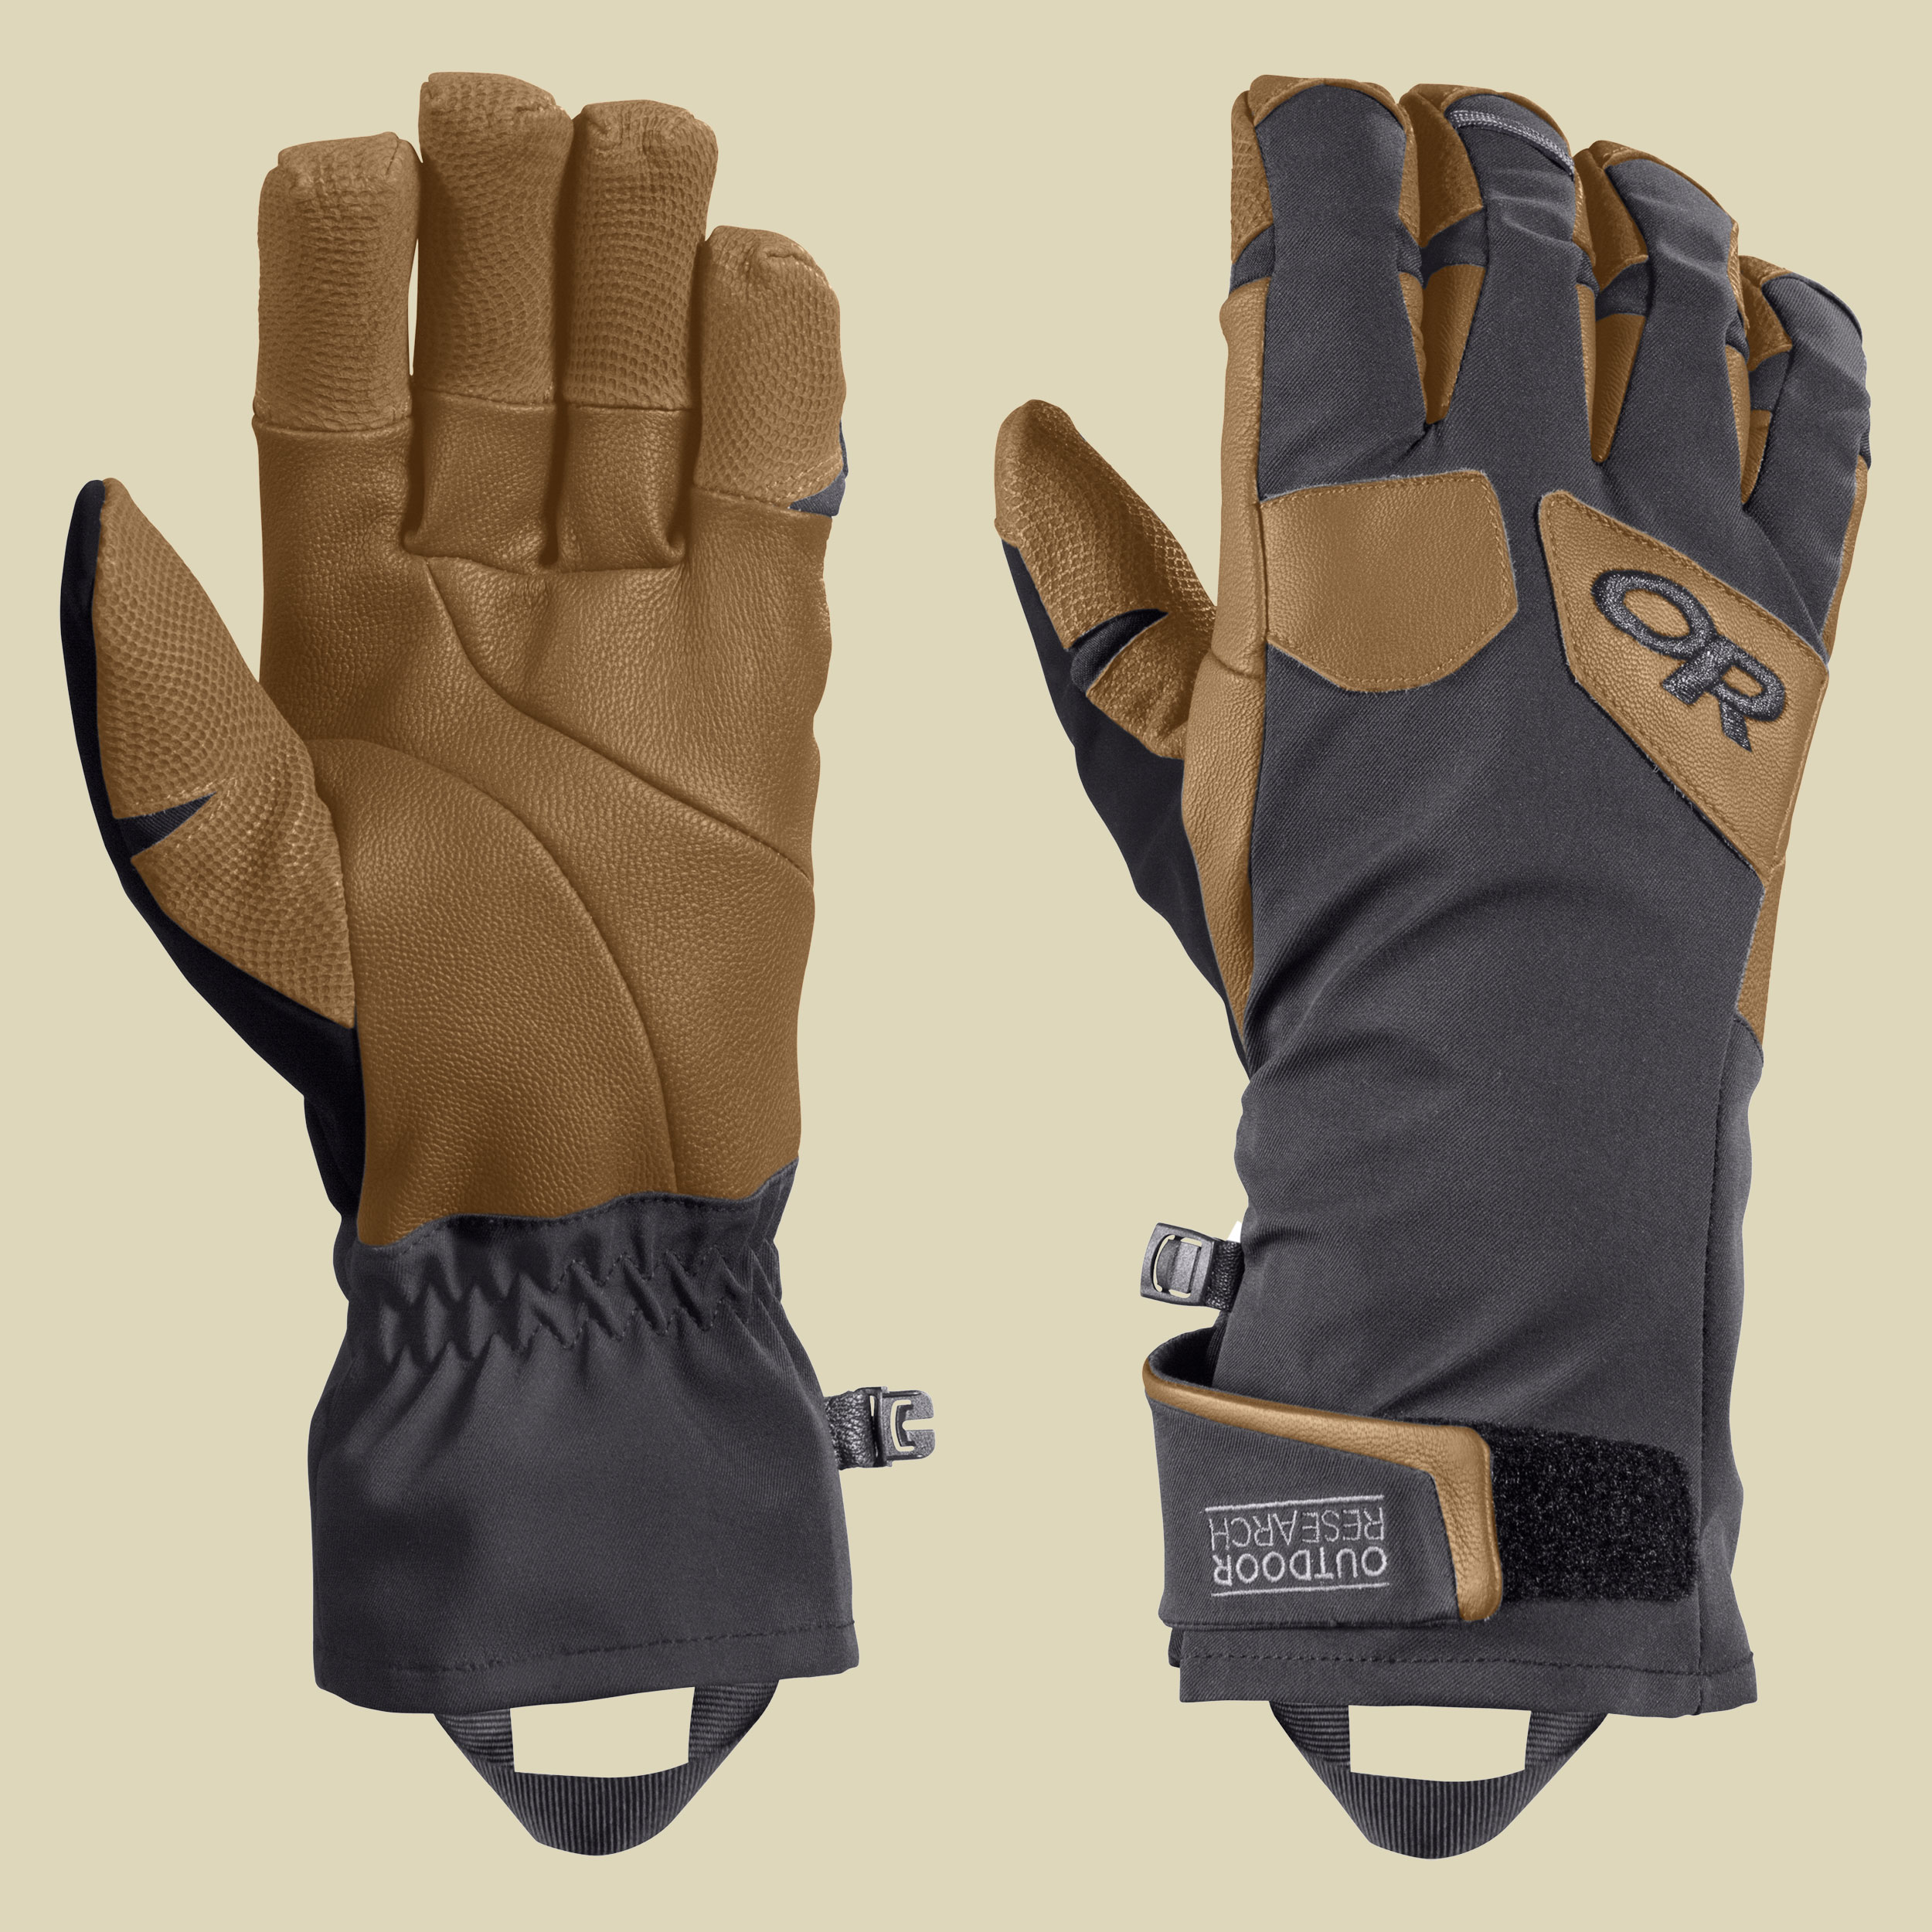 Extravert Gloves Men Größe S Farbe charcoal-natural